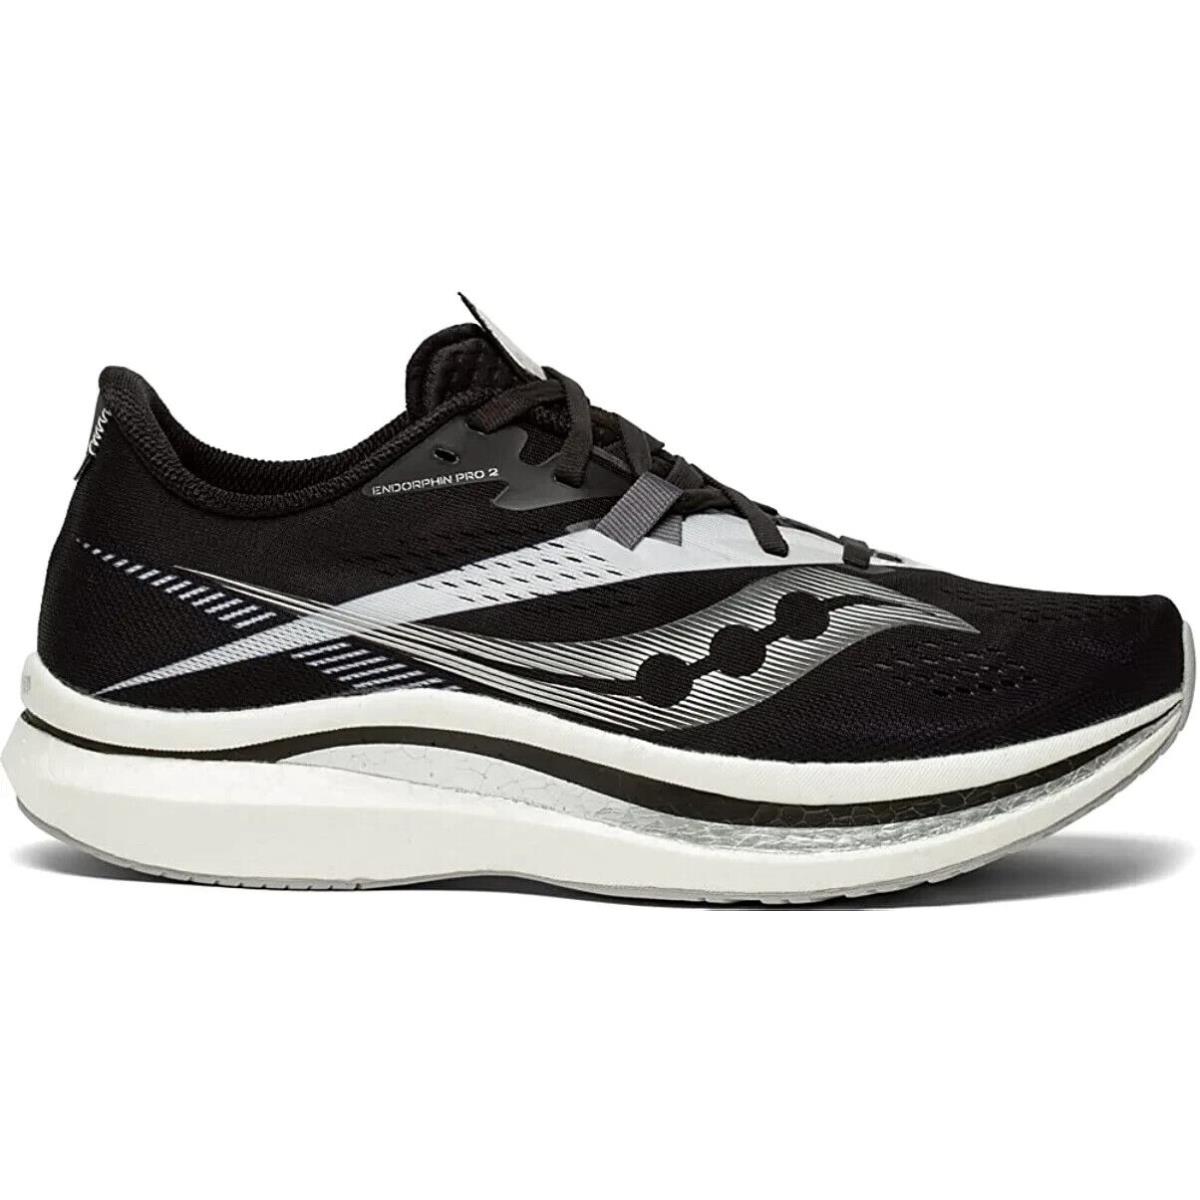 Saucony Men`s S20687-10 Endorphin Pro 2 Running Shoes Black/white 7 M US